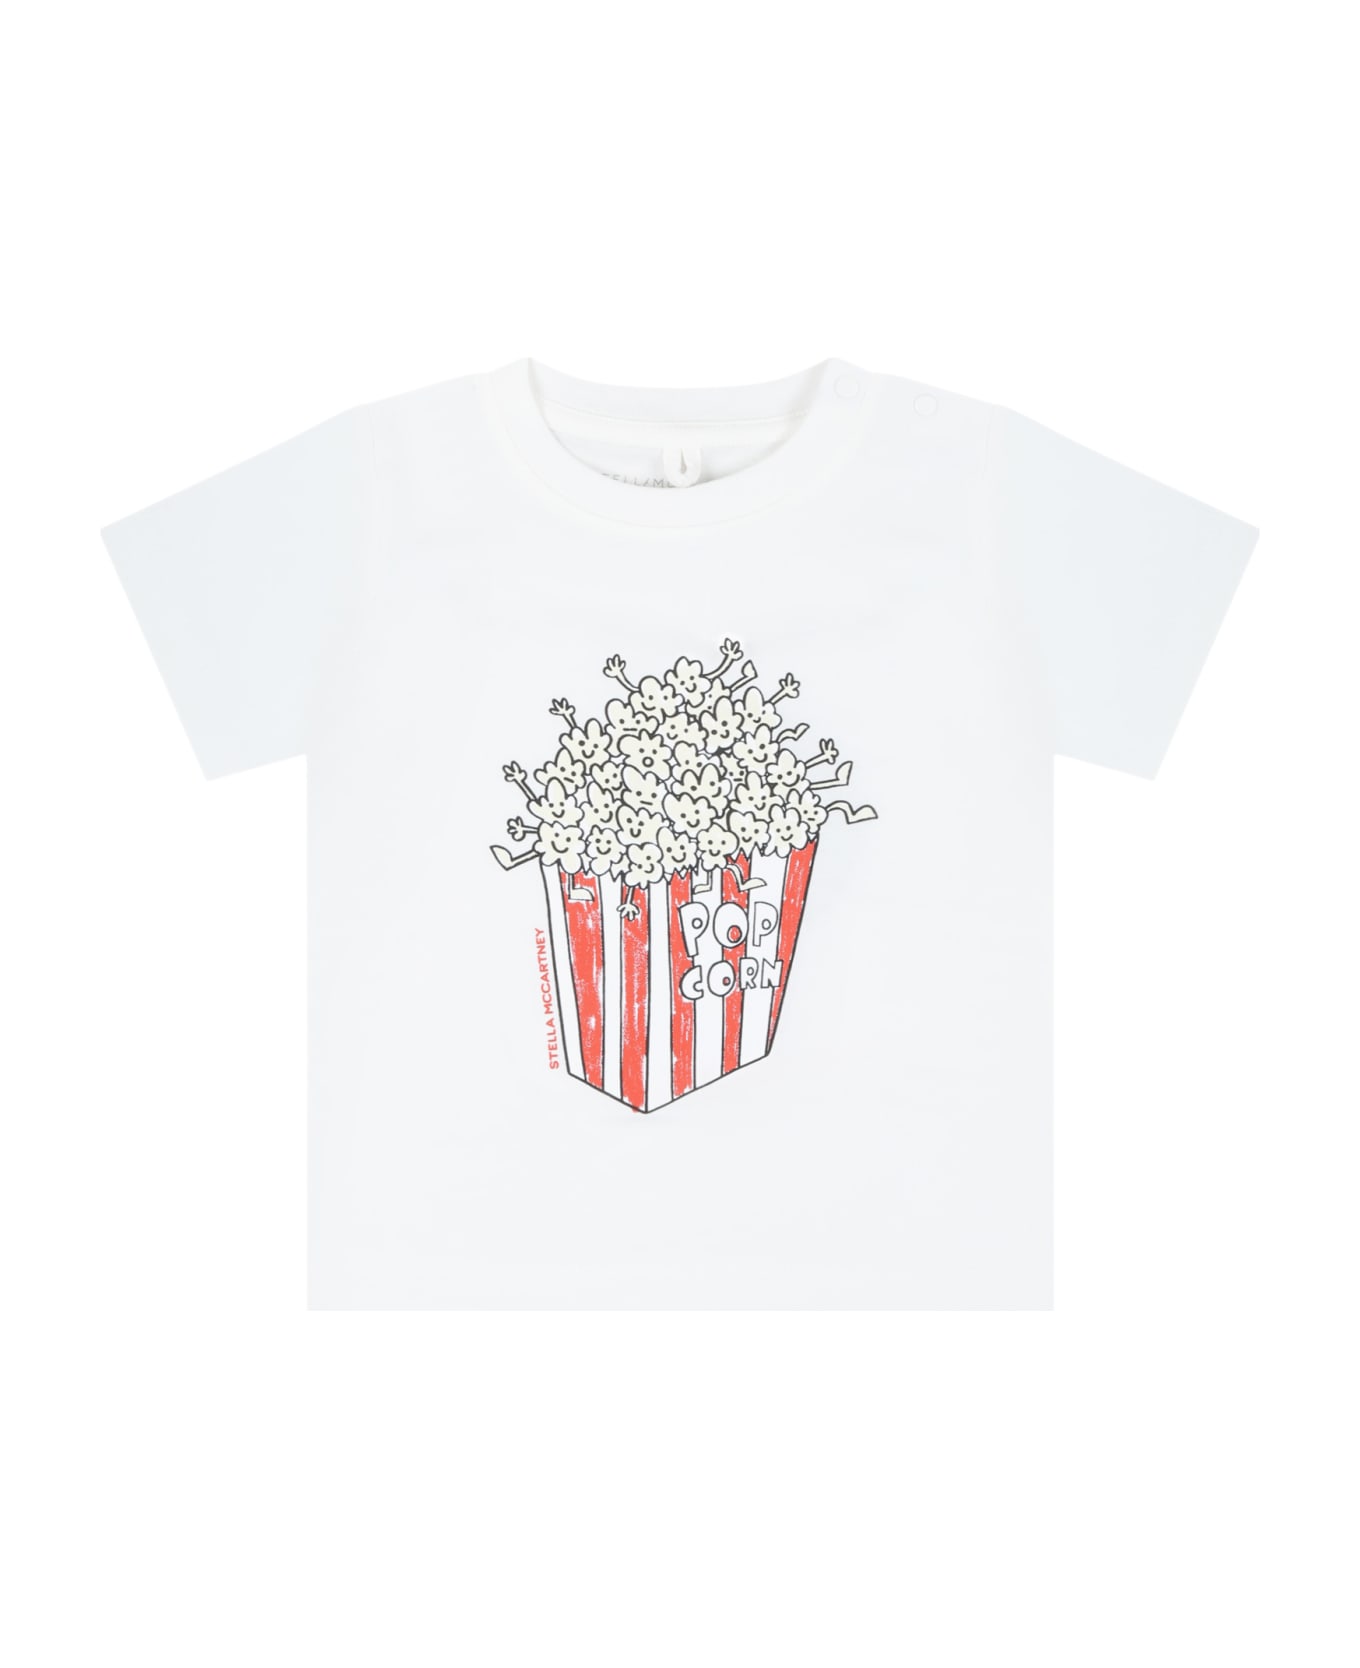 Stella McCartney Kids White T-shirt For Baby Boy With Pop Corn - White